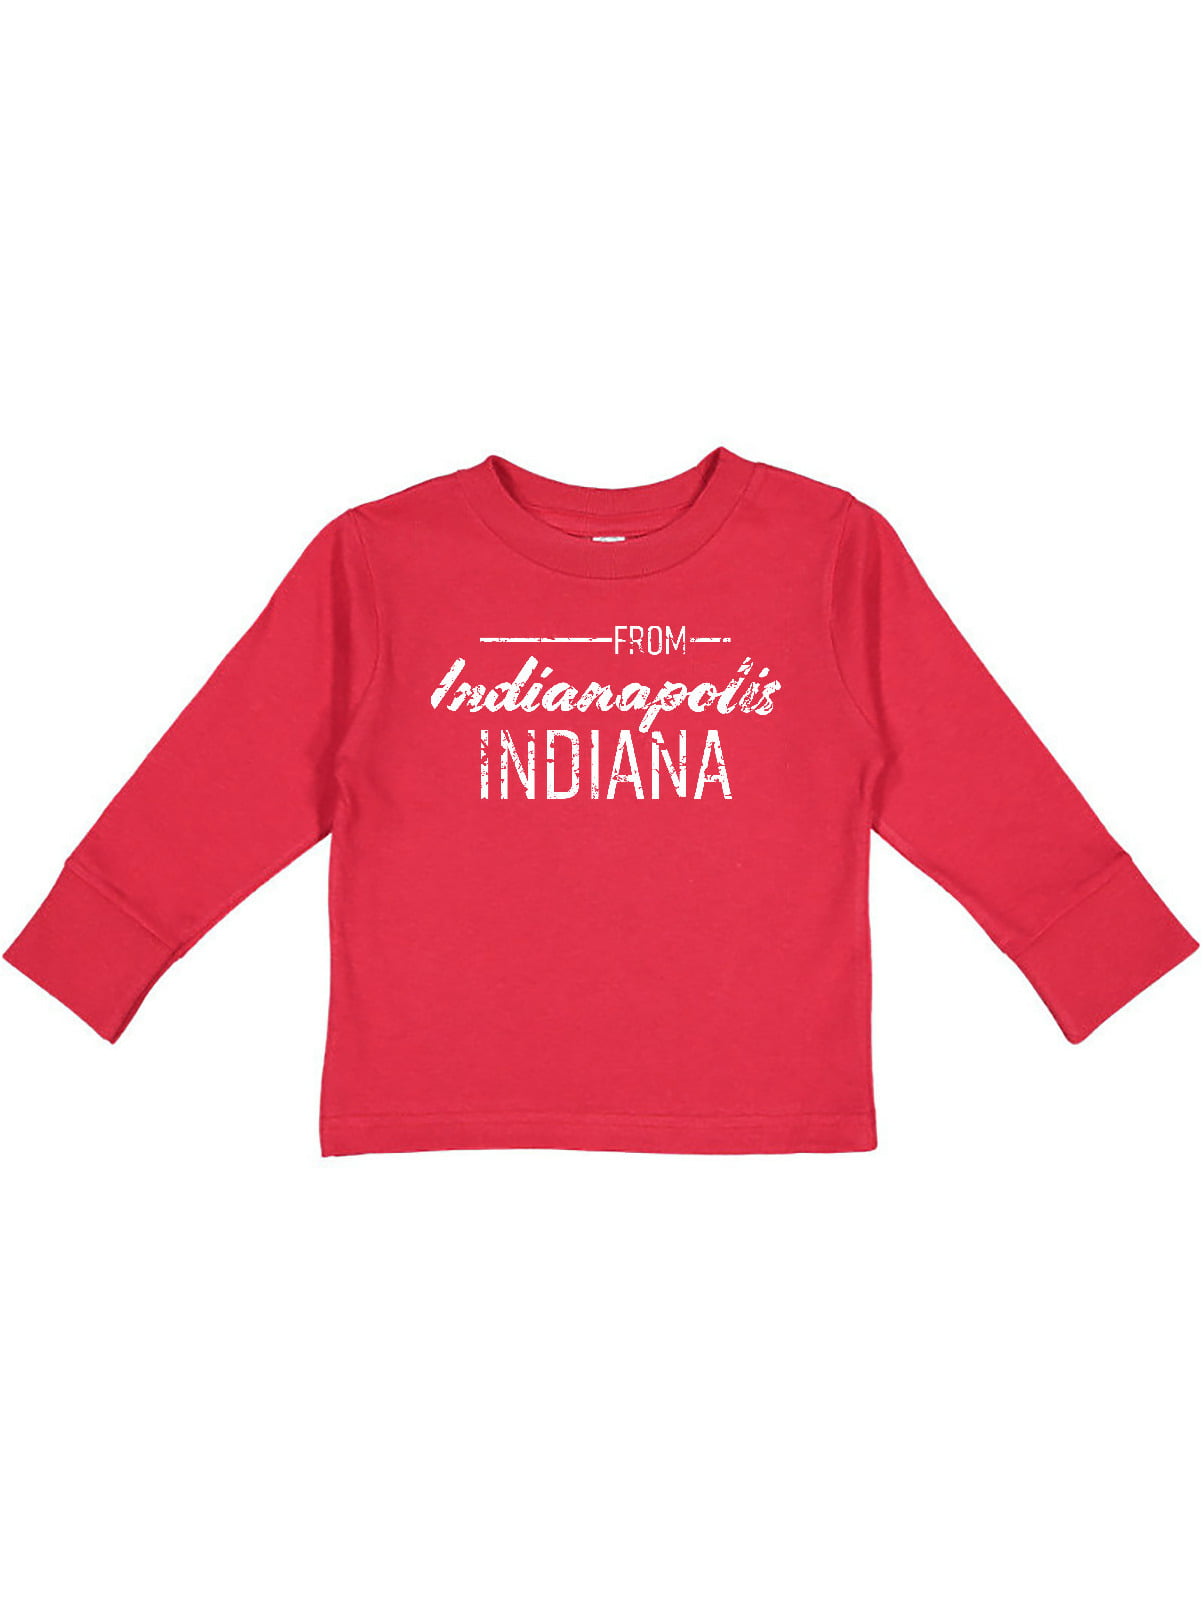 CERTONGCXTS Toddler Indianapolis Flag Octopus Shaped ComfortSoft Long Sleeve T-Shirt